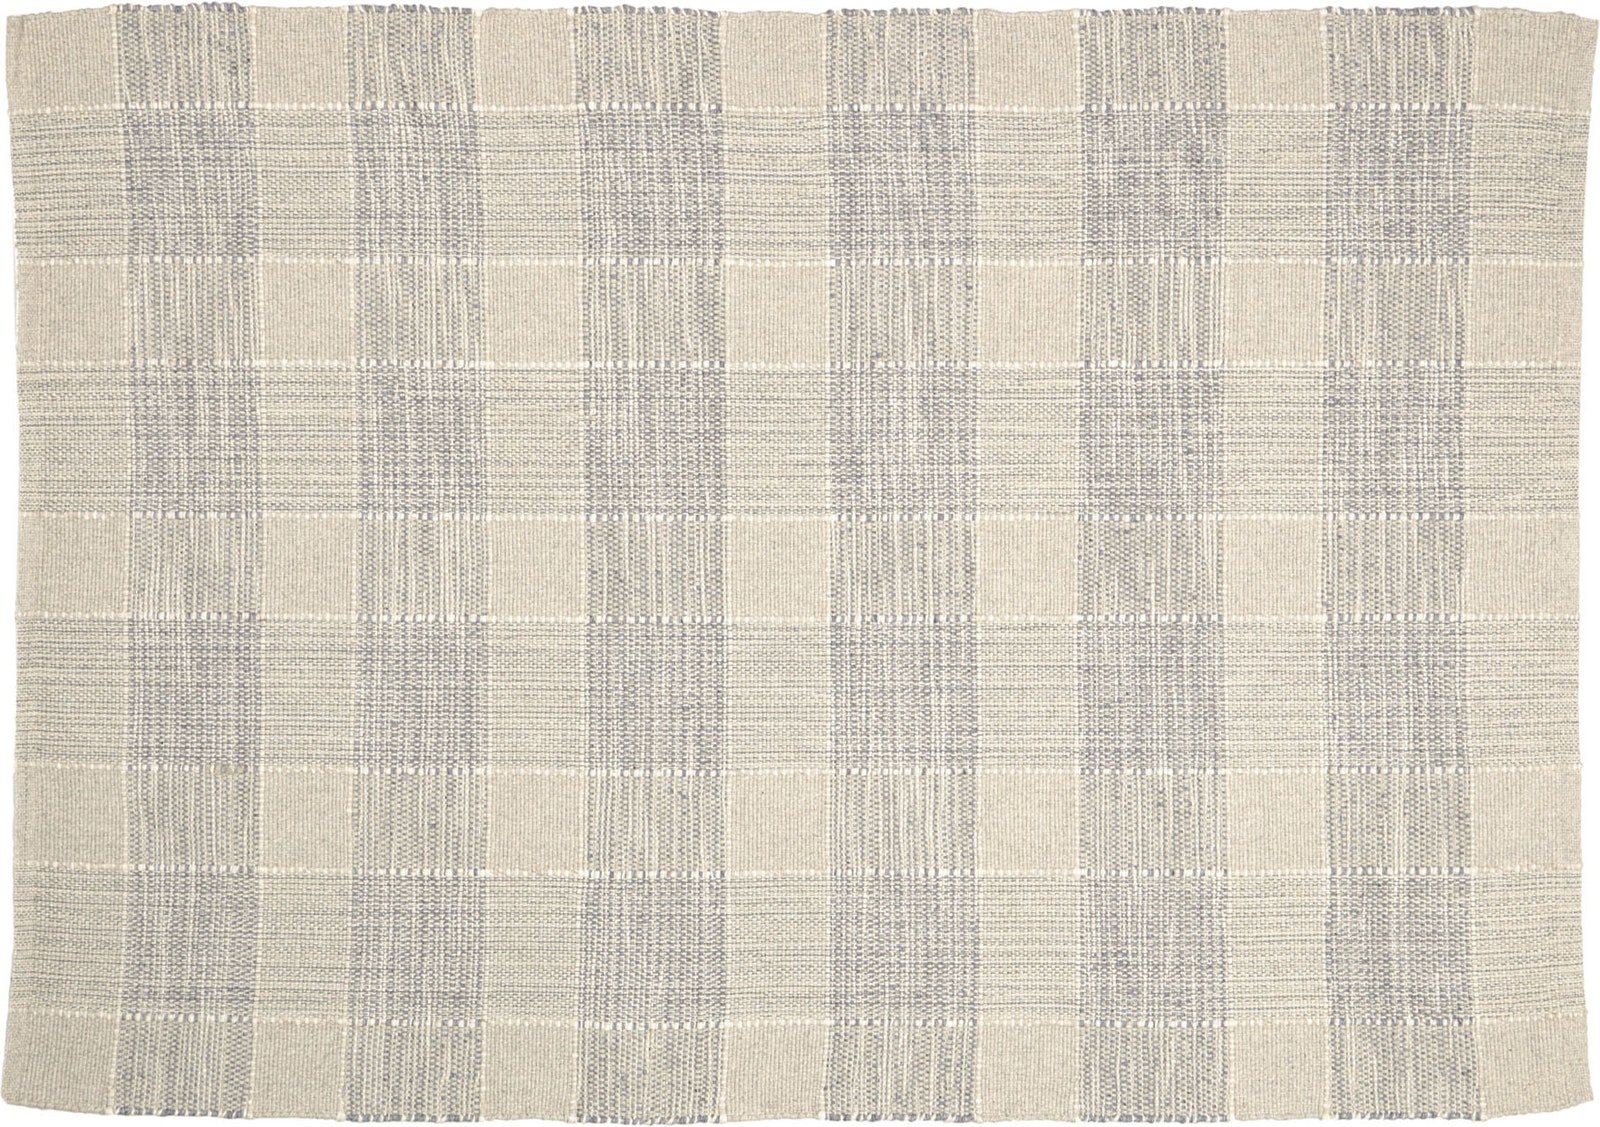 9: Donata, Tæppe, nordisk, moderne, stof by LaForma (H: 1 cm. B: 160 cm. L: 230 cm., Beige/Grå)